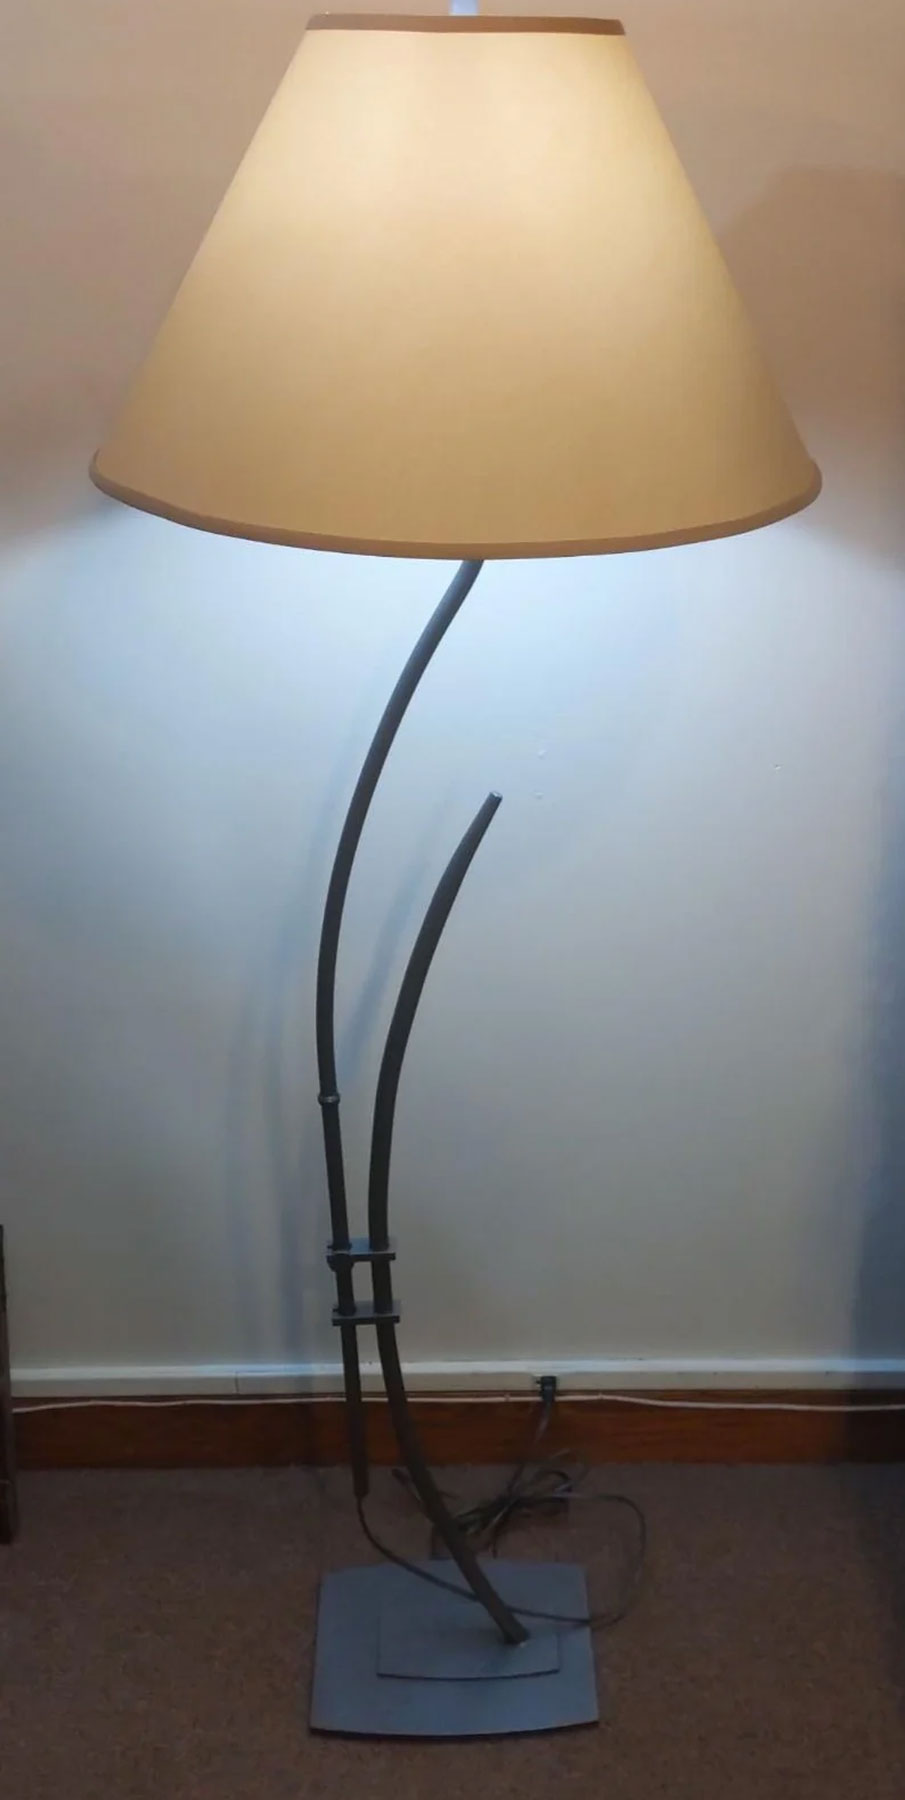 Hubbardton Forge Metamorphic Contemporary Floor Lamp in Natural Iron Finish